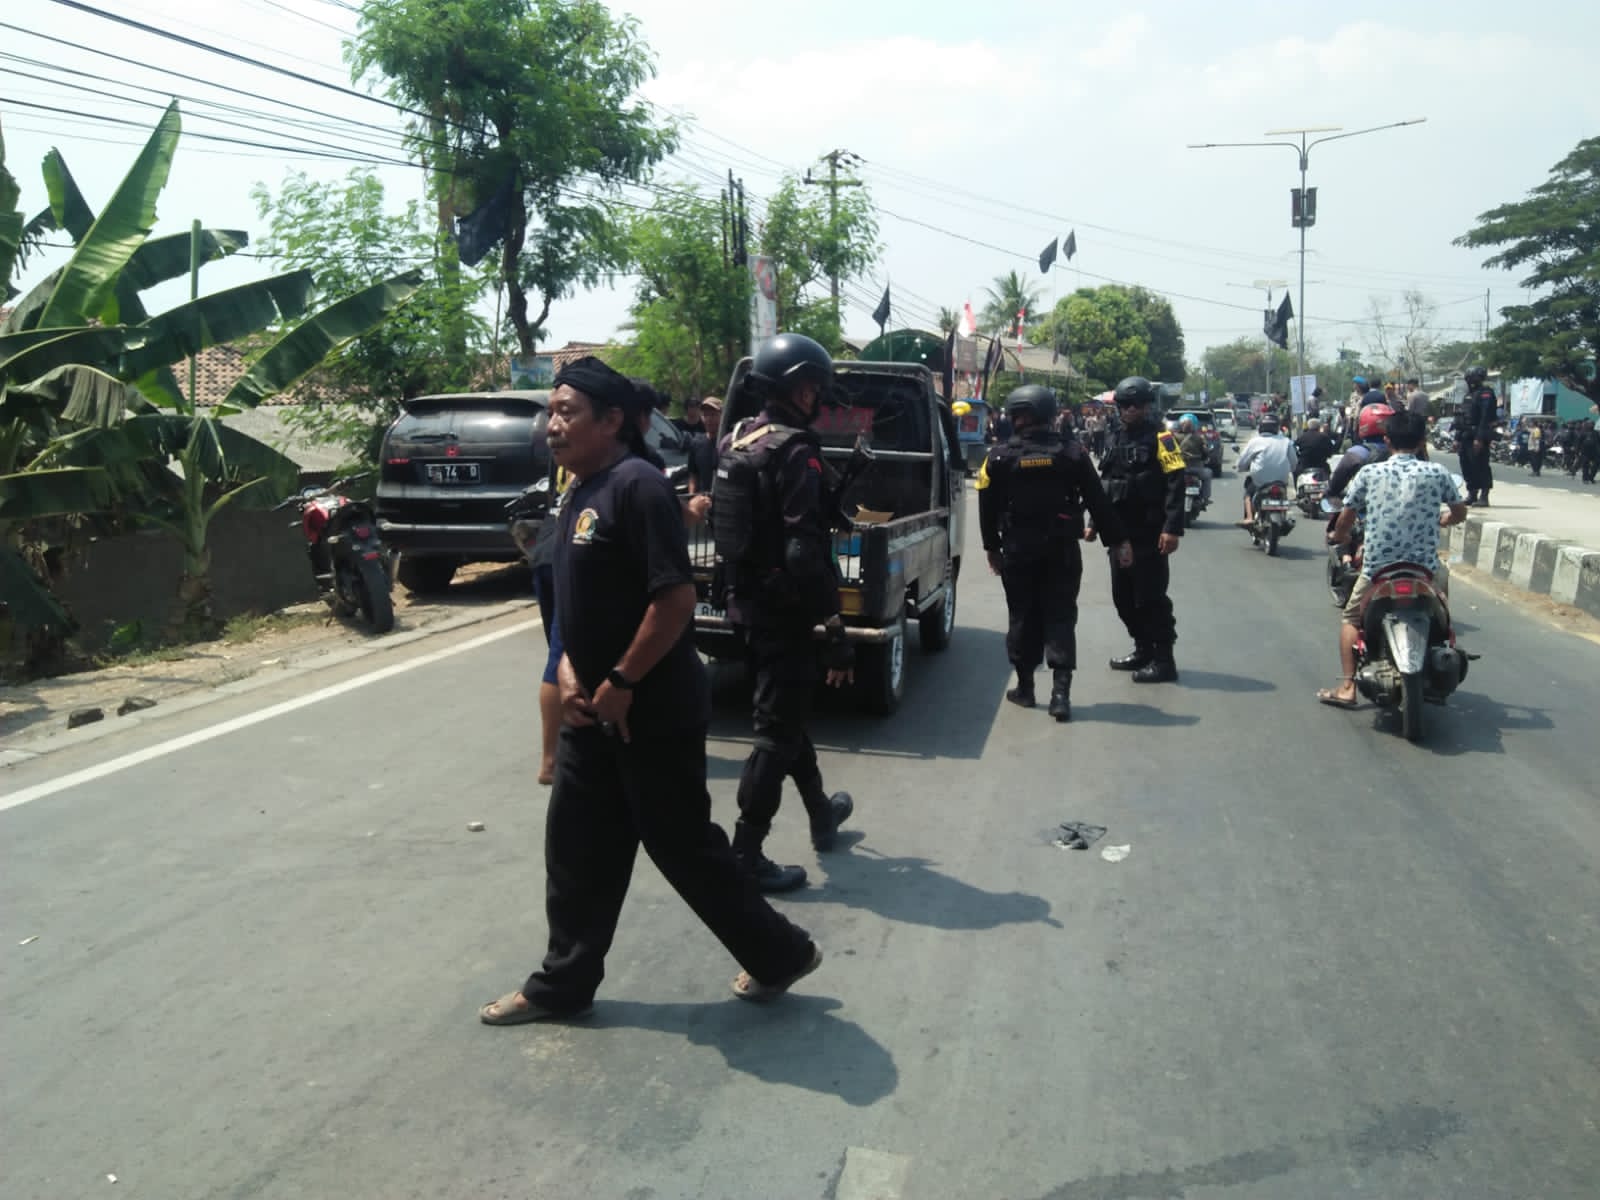 Di Desa Kapatekan Cirebon, Batalyon C Satbrimob Polda Jabar Turut Berpartisipasi dalam Penegakan Keamanan